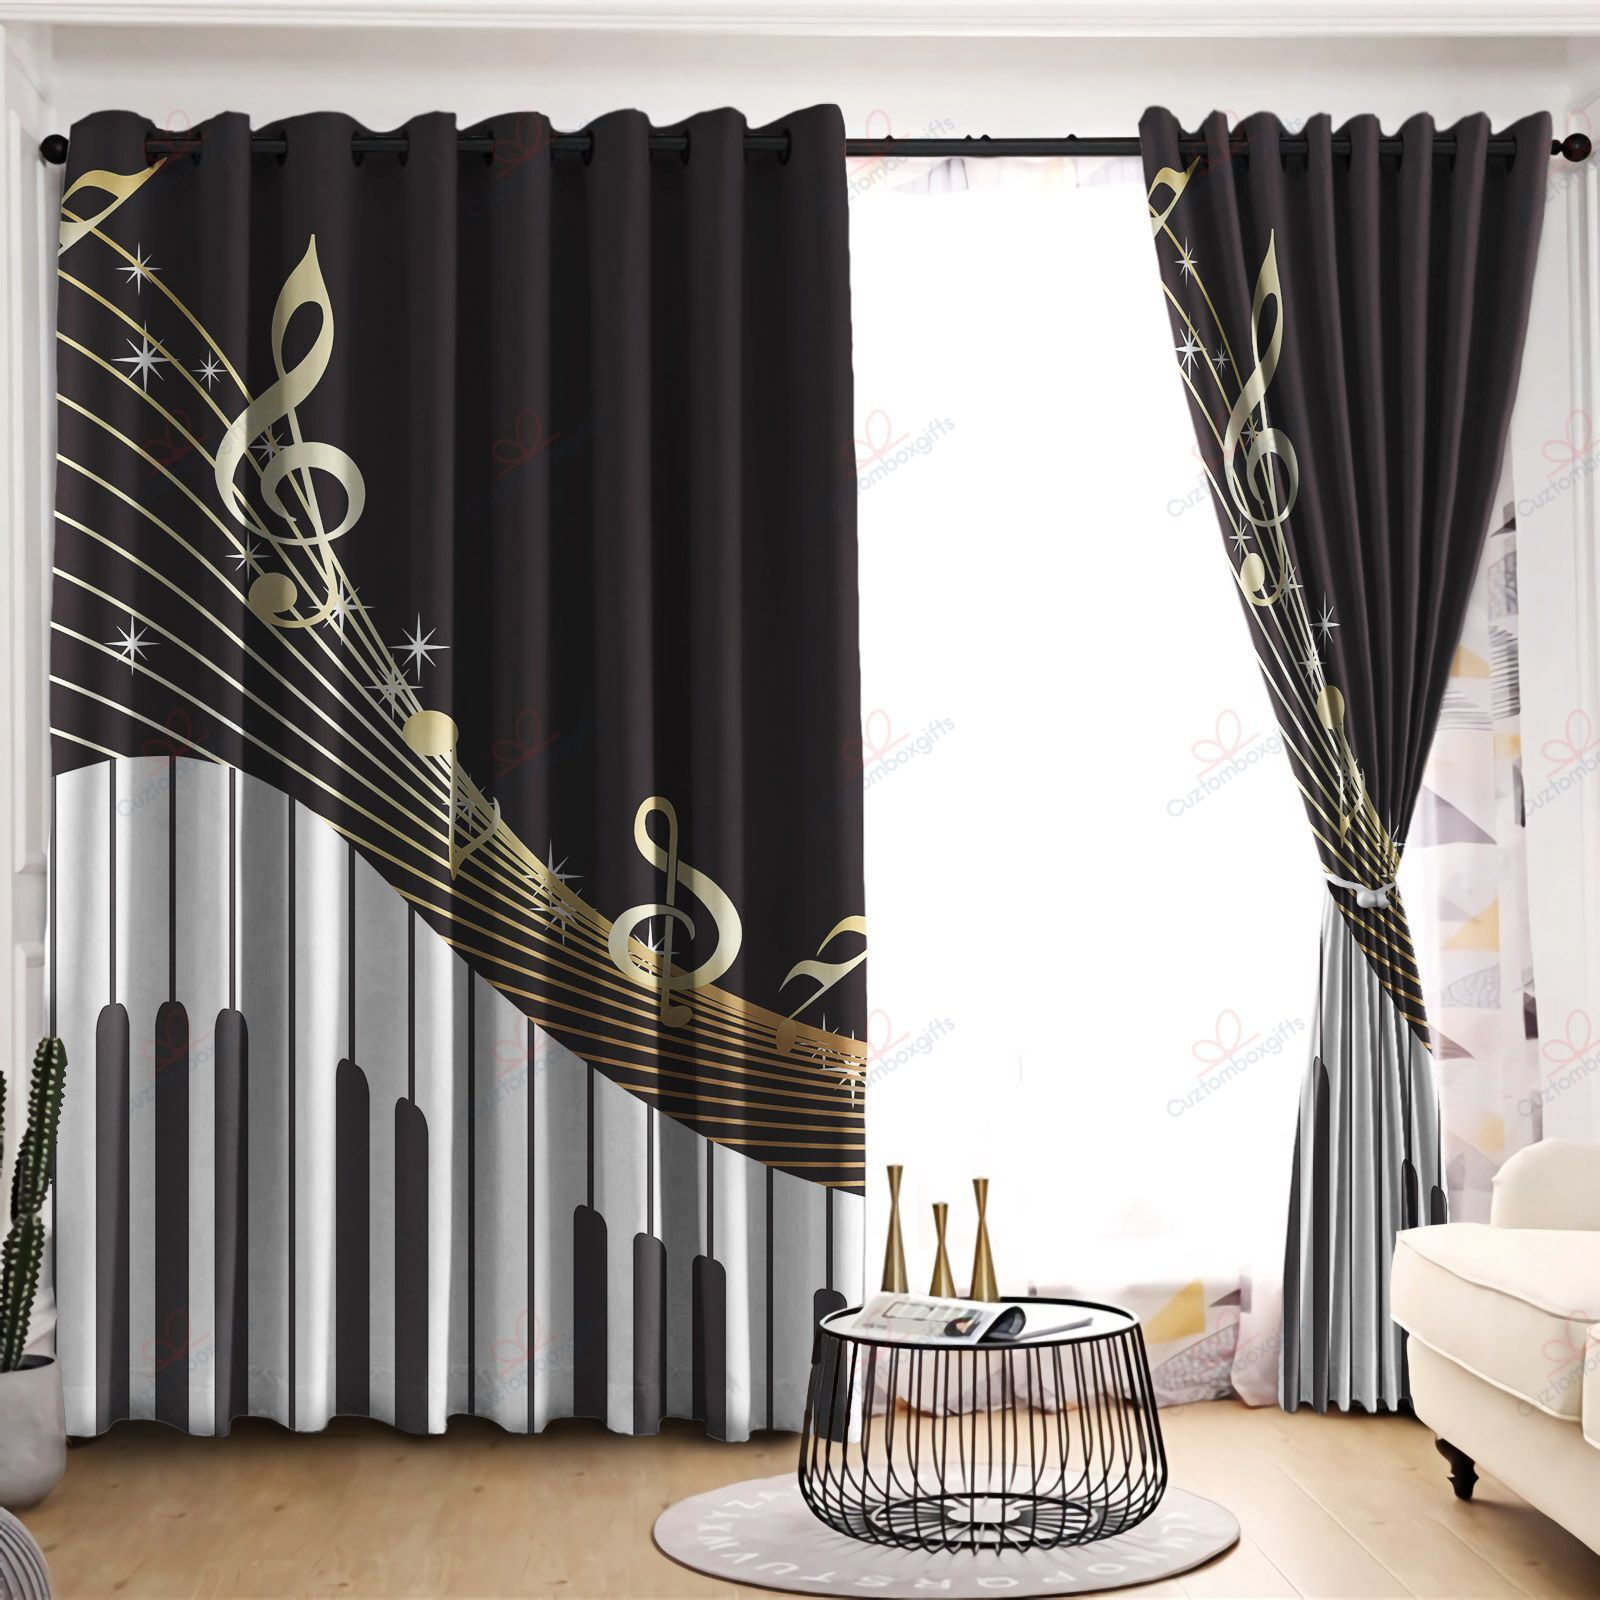 Piano Music Paradise Printed Window Curtain Home Decor